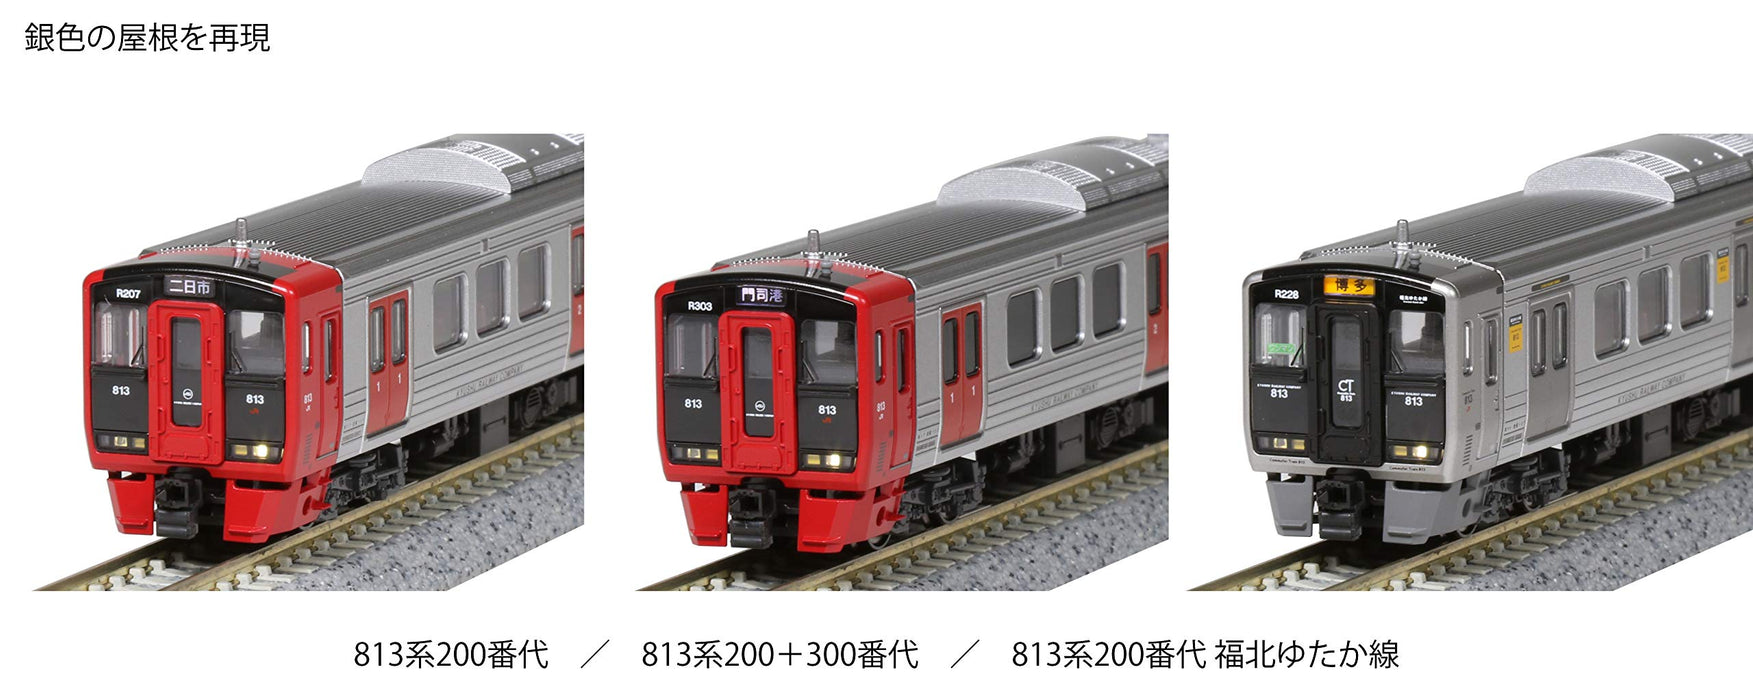 Kato Spur N 813 Serie Eisenbahn-Modellzug 3-Wagen-Set Fukuhoku Yutaka Linie